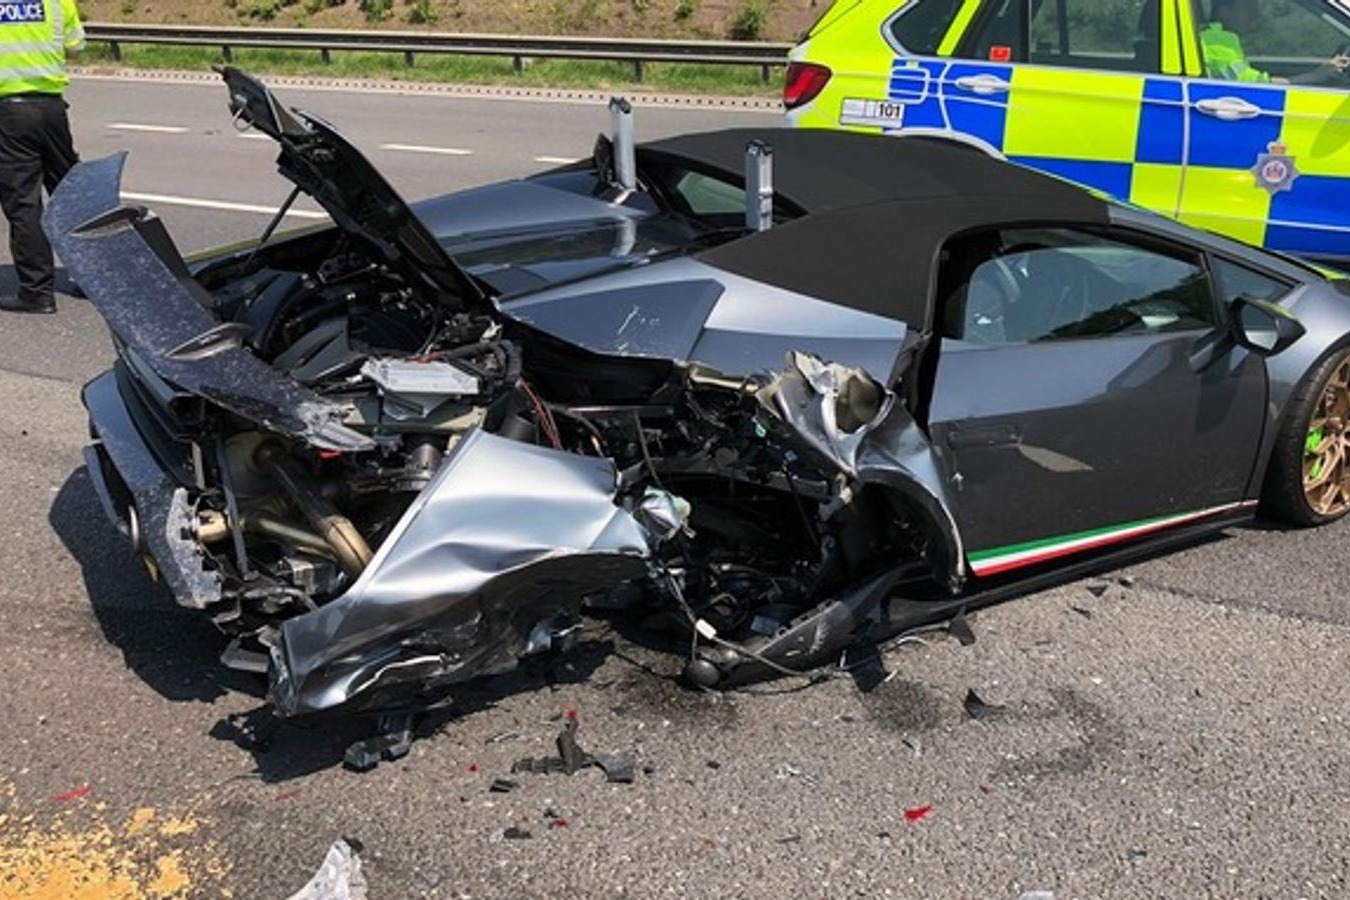 New Lamborghini sports car crashes in West Yorkshire twenty minutes